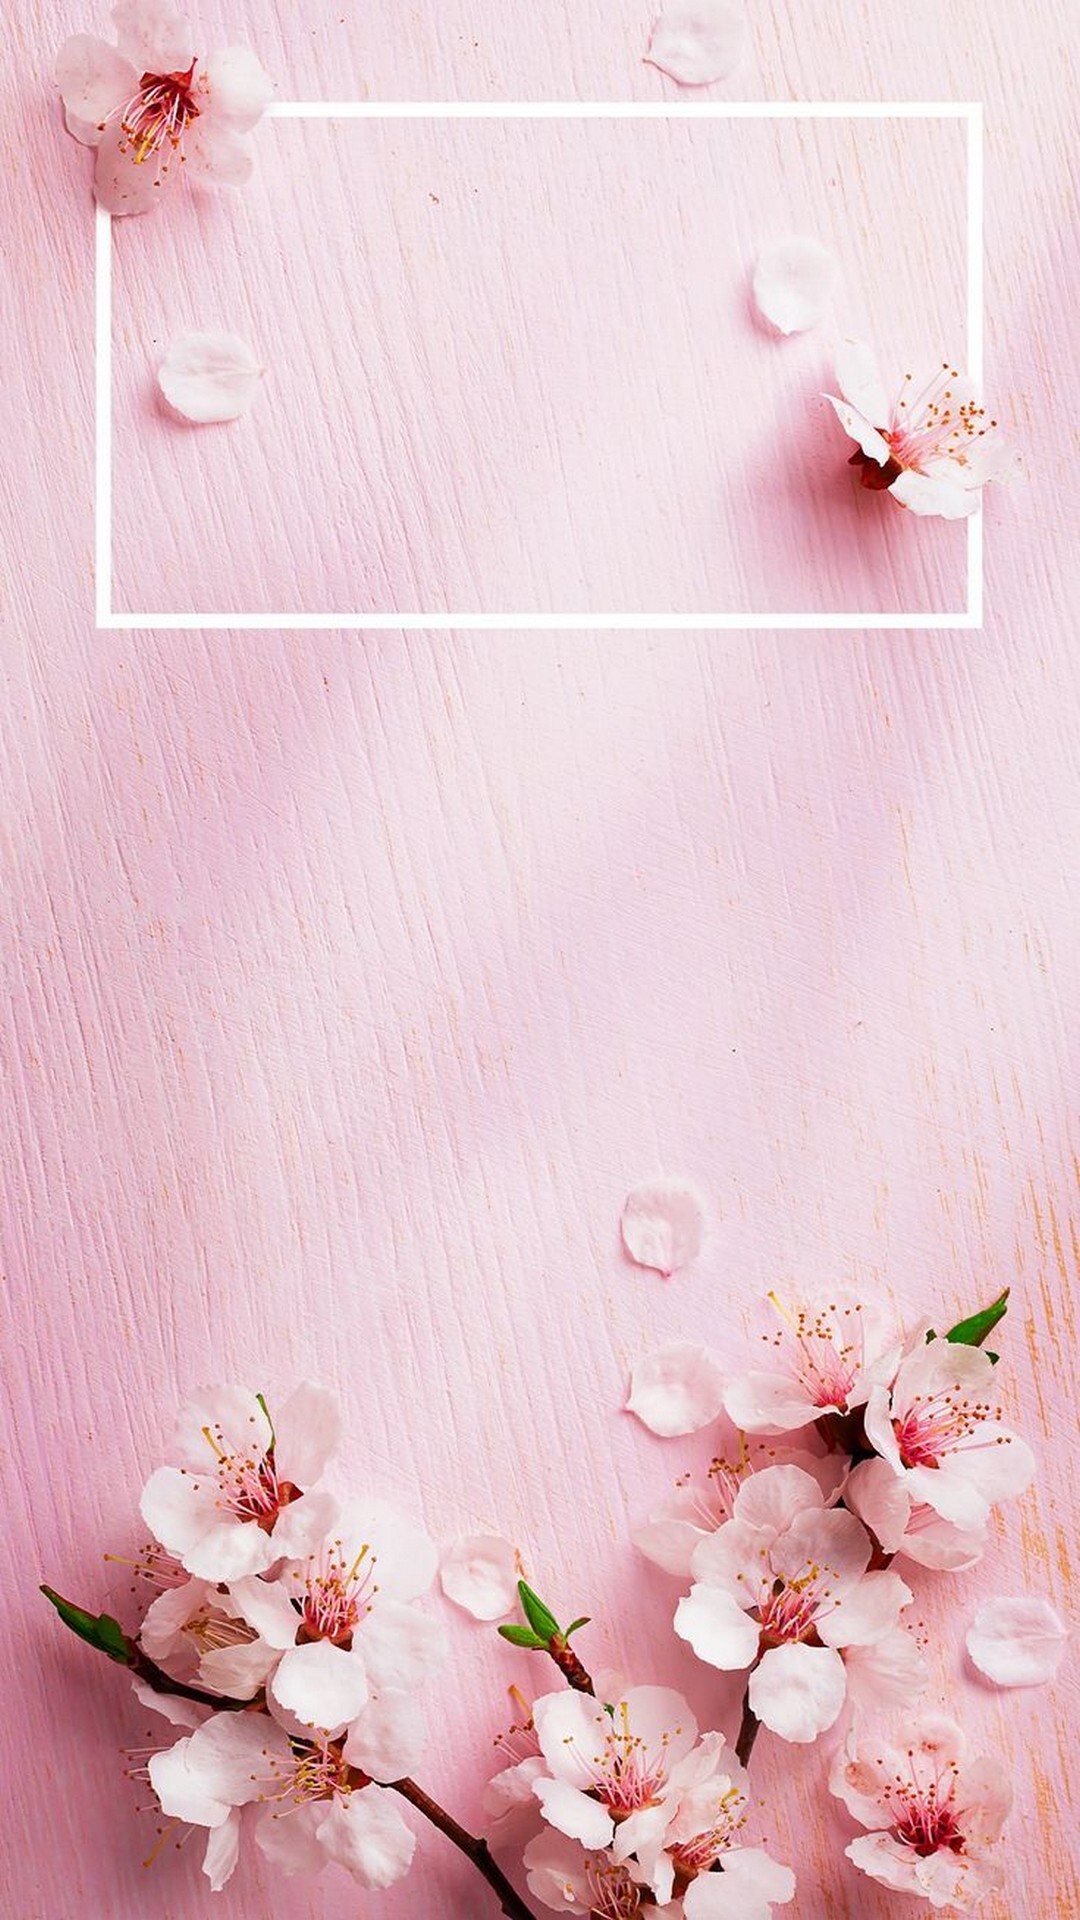 iPhone X Wallpaper Rose Gold Lock Screen resolution 1080x1920